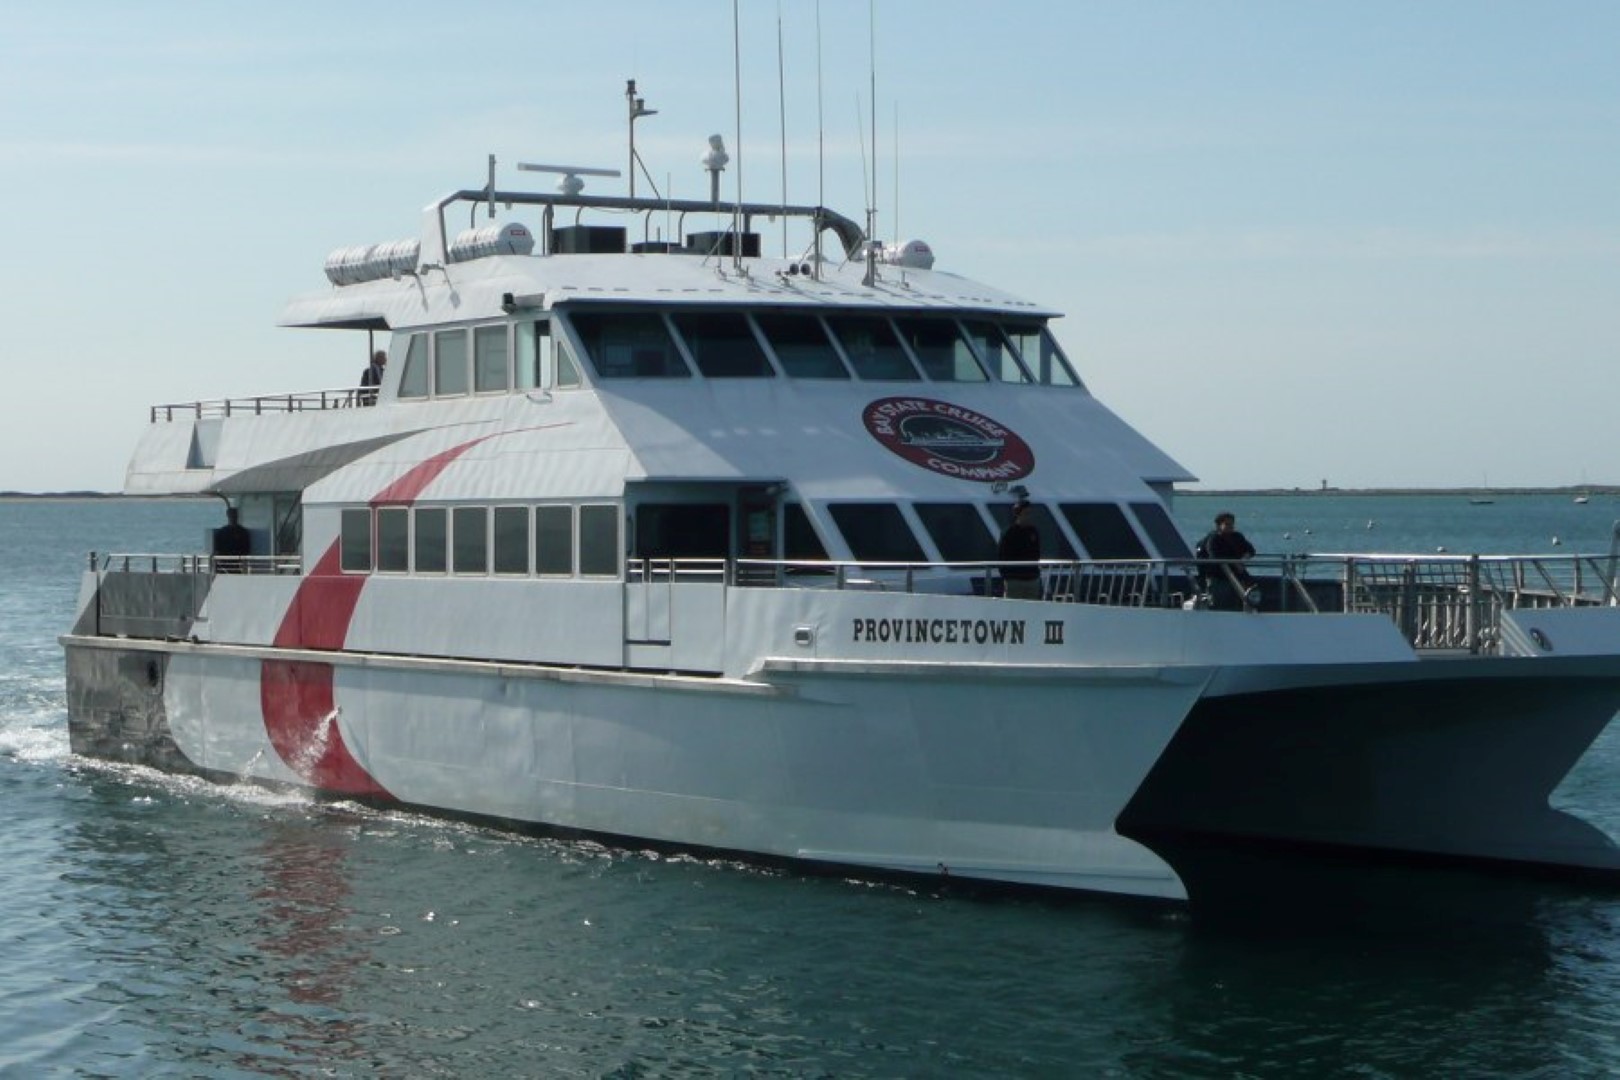 White high speed catamaran ferry from Bay State Cruises